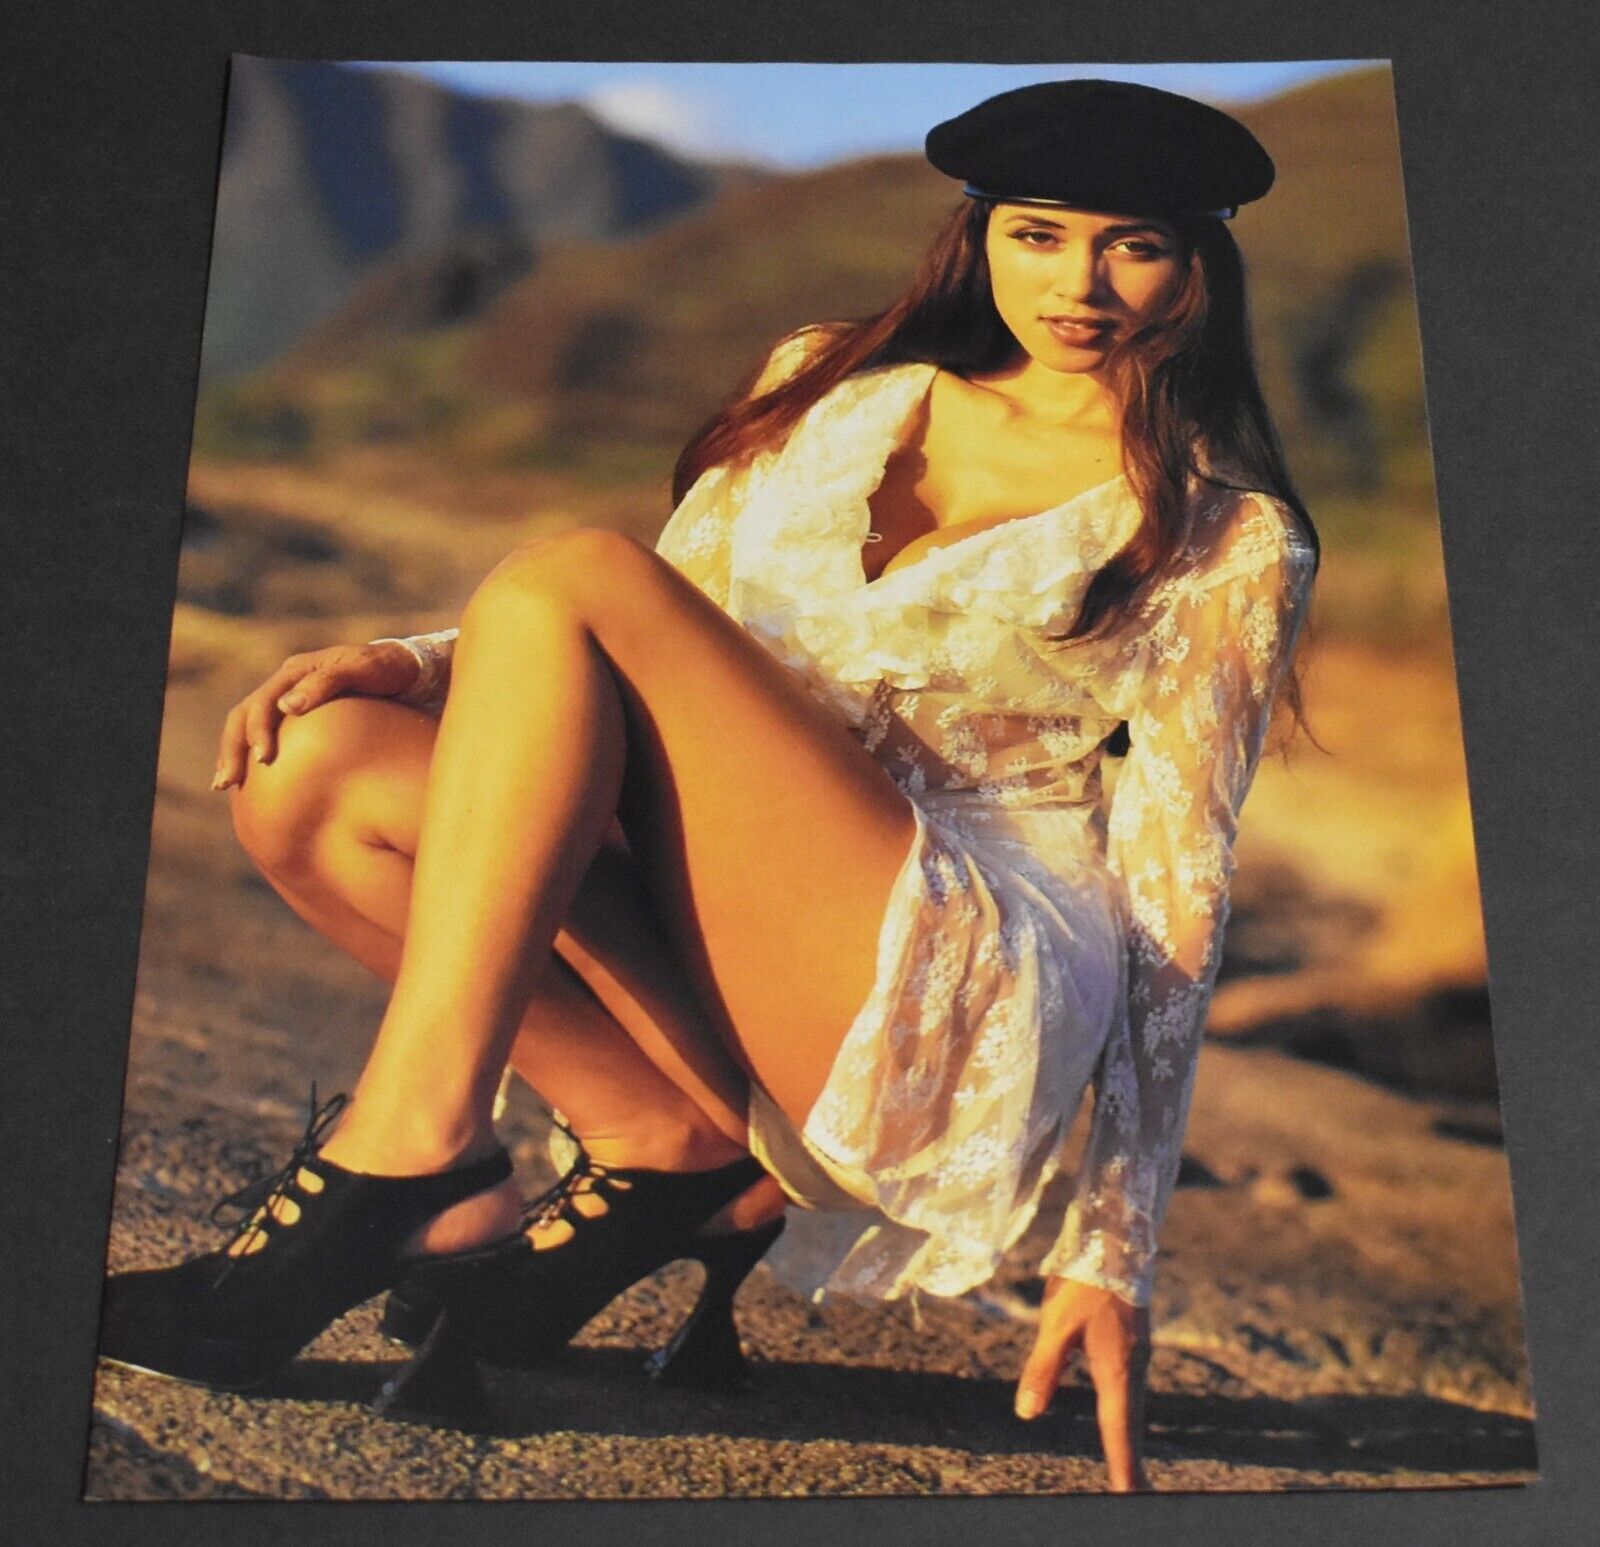 1994 Print Ad Sexy Heels Long Legs Fashion Lady Brunette Sun Dress Outdoors Art